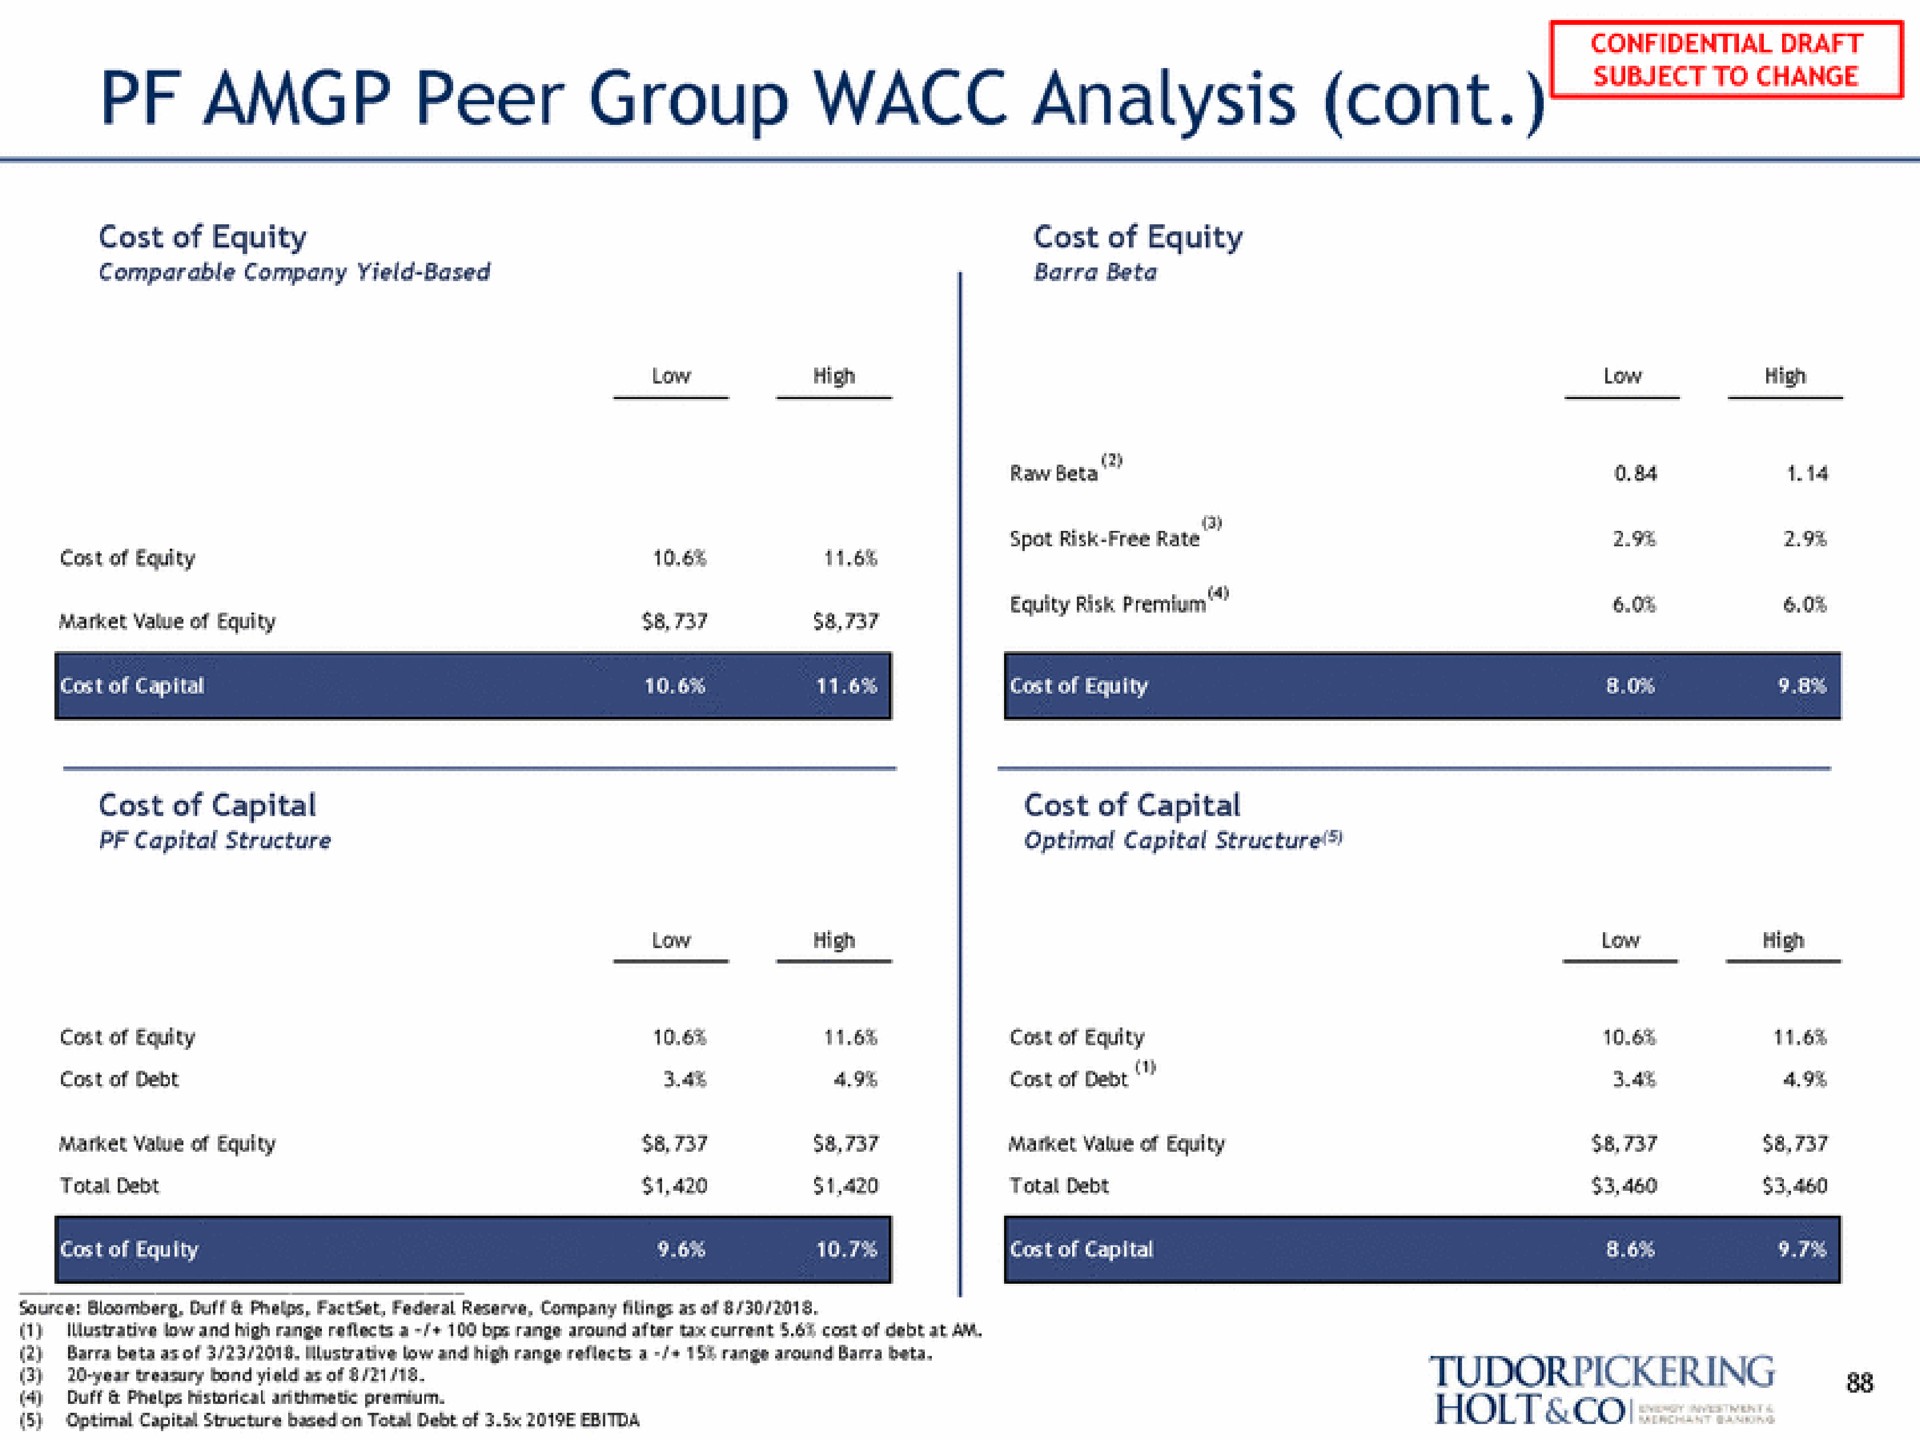 peer group analysis | Tudor, Pickering, Holt & Co